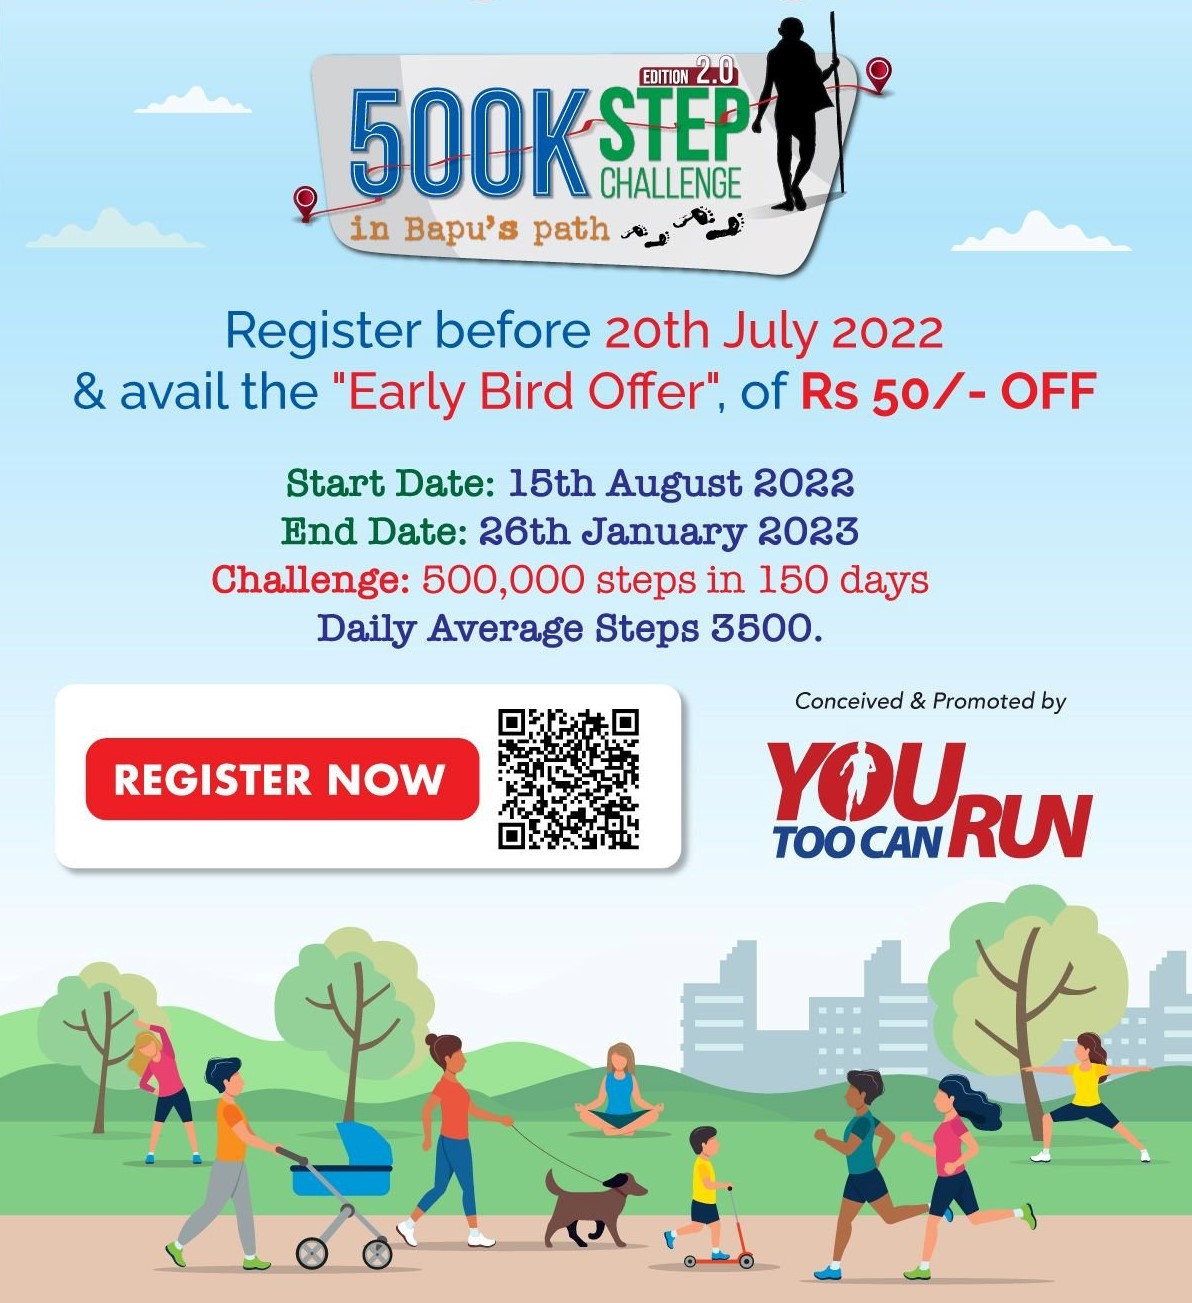 500k Step Challenge - Edition 2.0